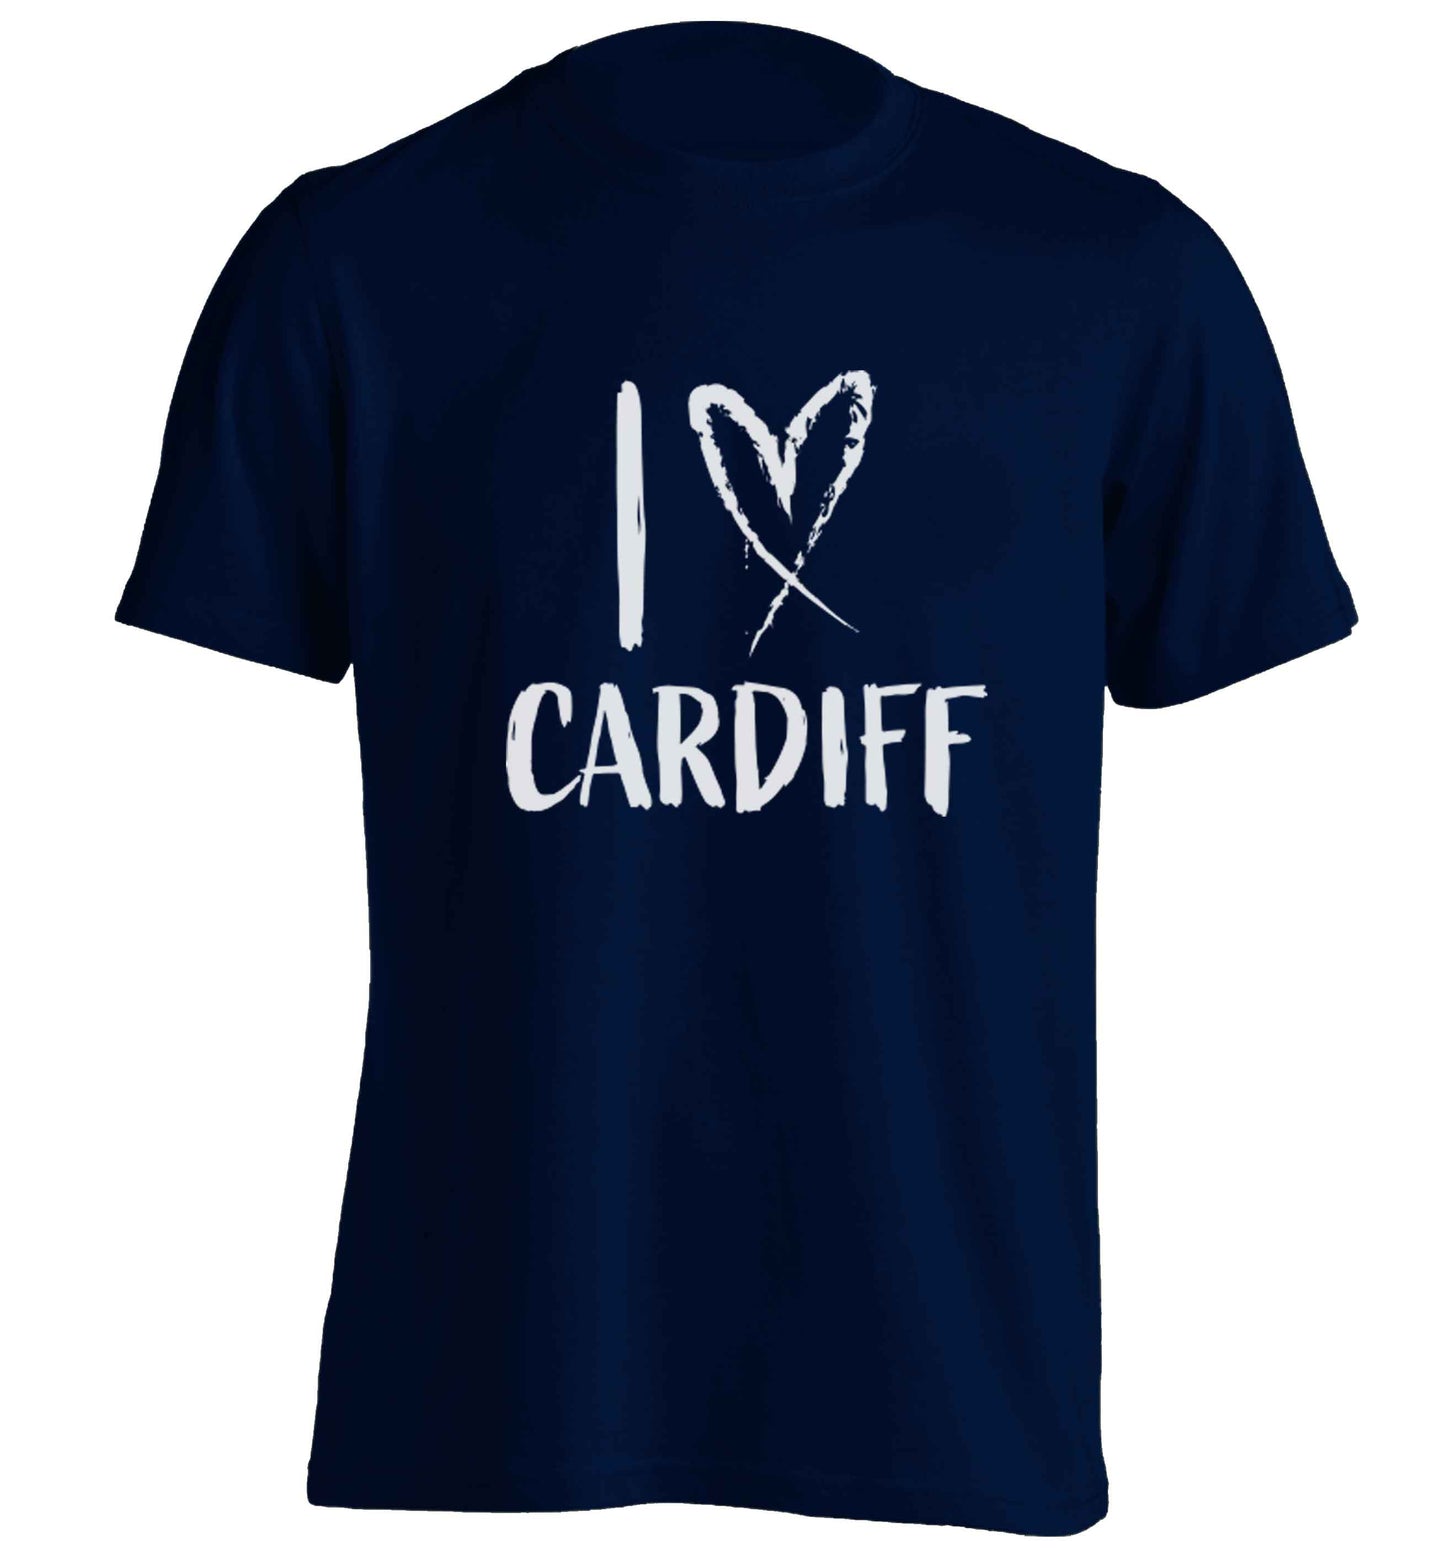 I love Cardiff adults unisex navy Tshirt 2XL